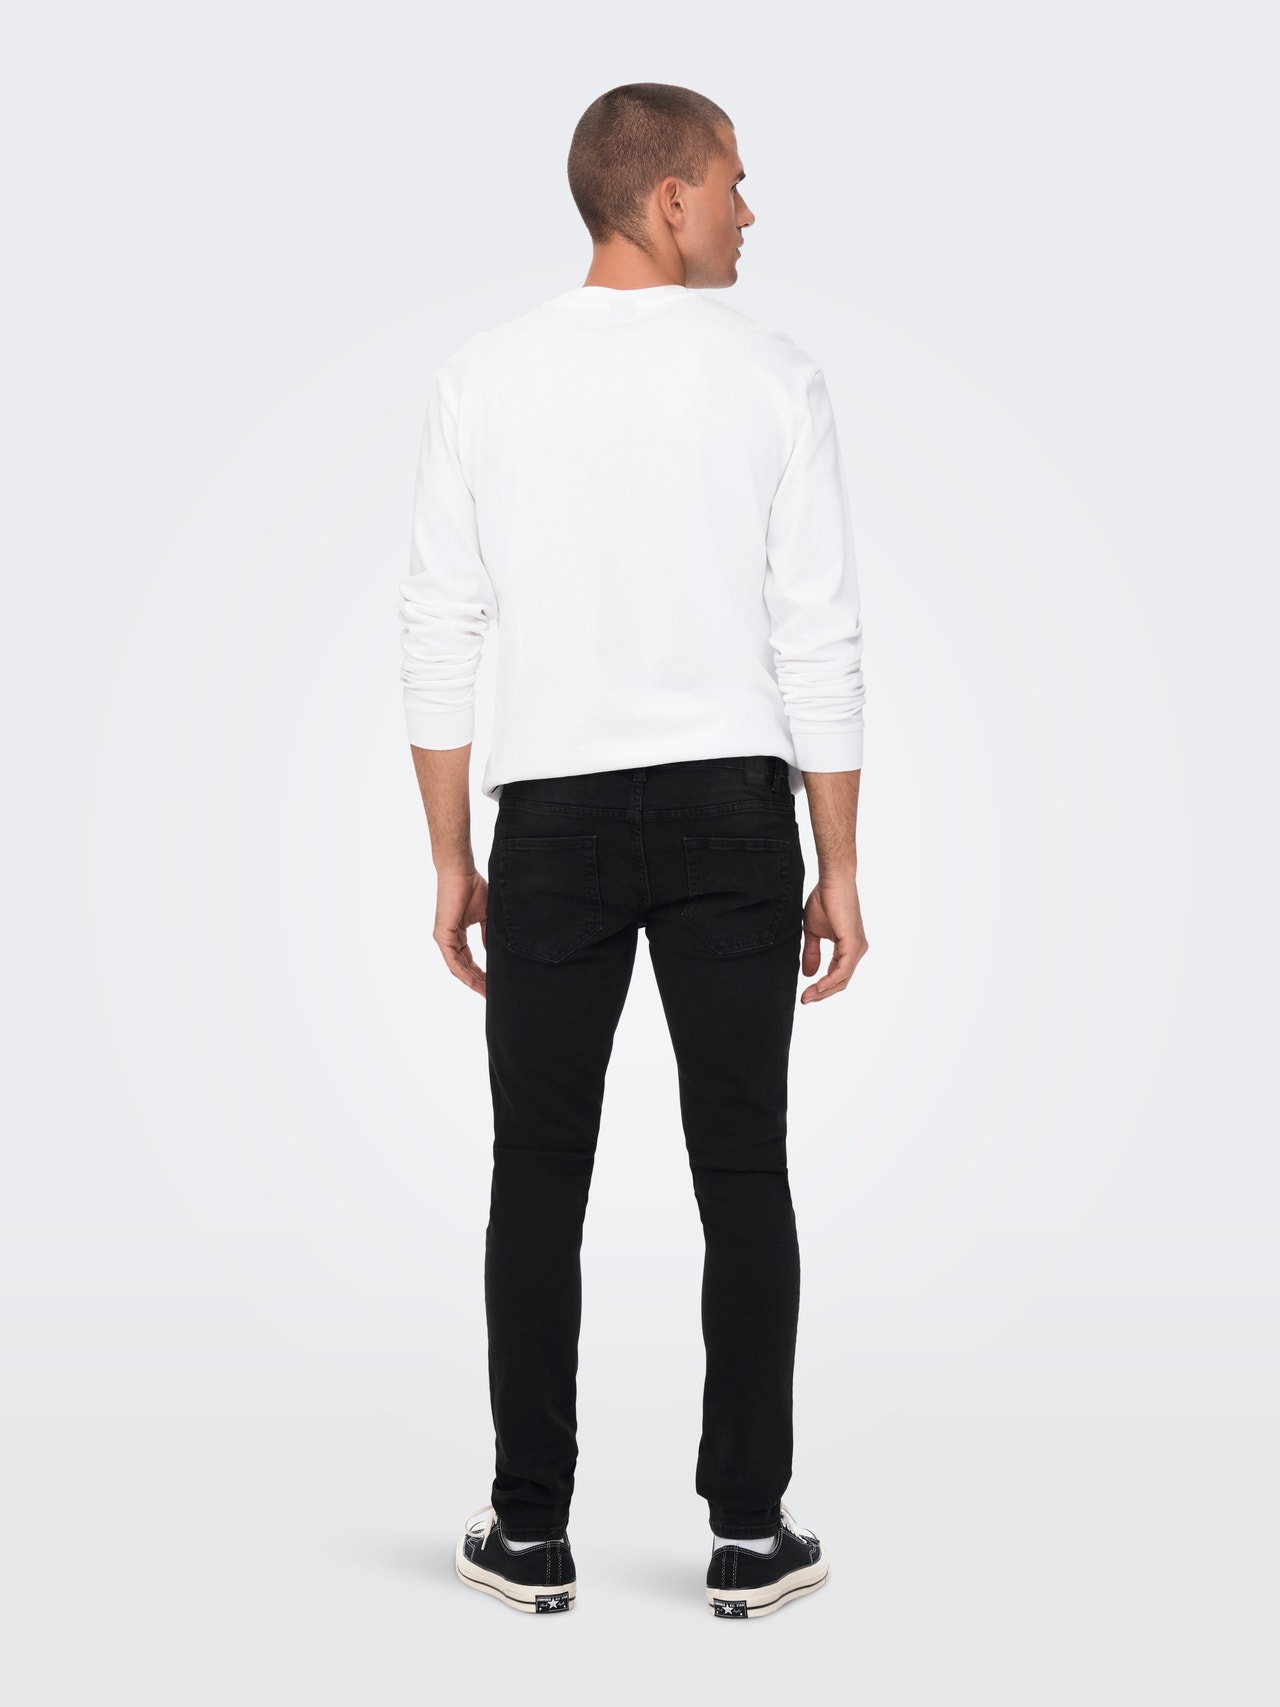 Express Men's Slim Fit Black Workwear Pants 33x30 Straight Leg Cotton 